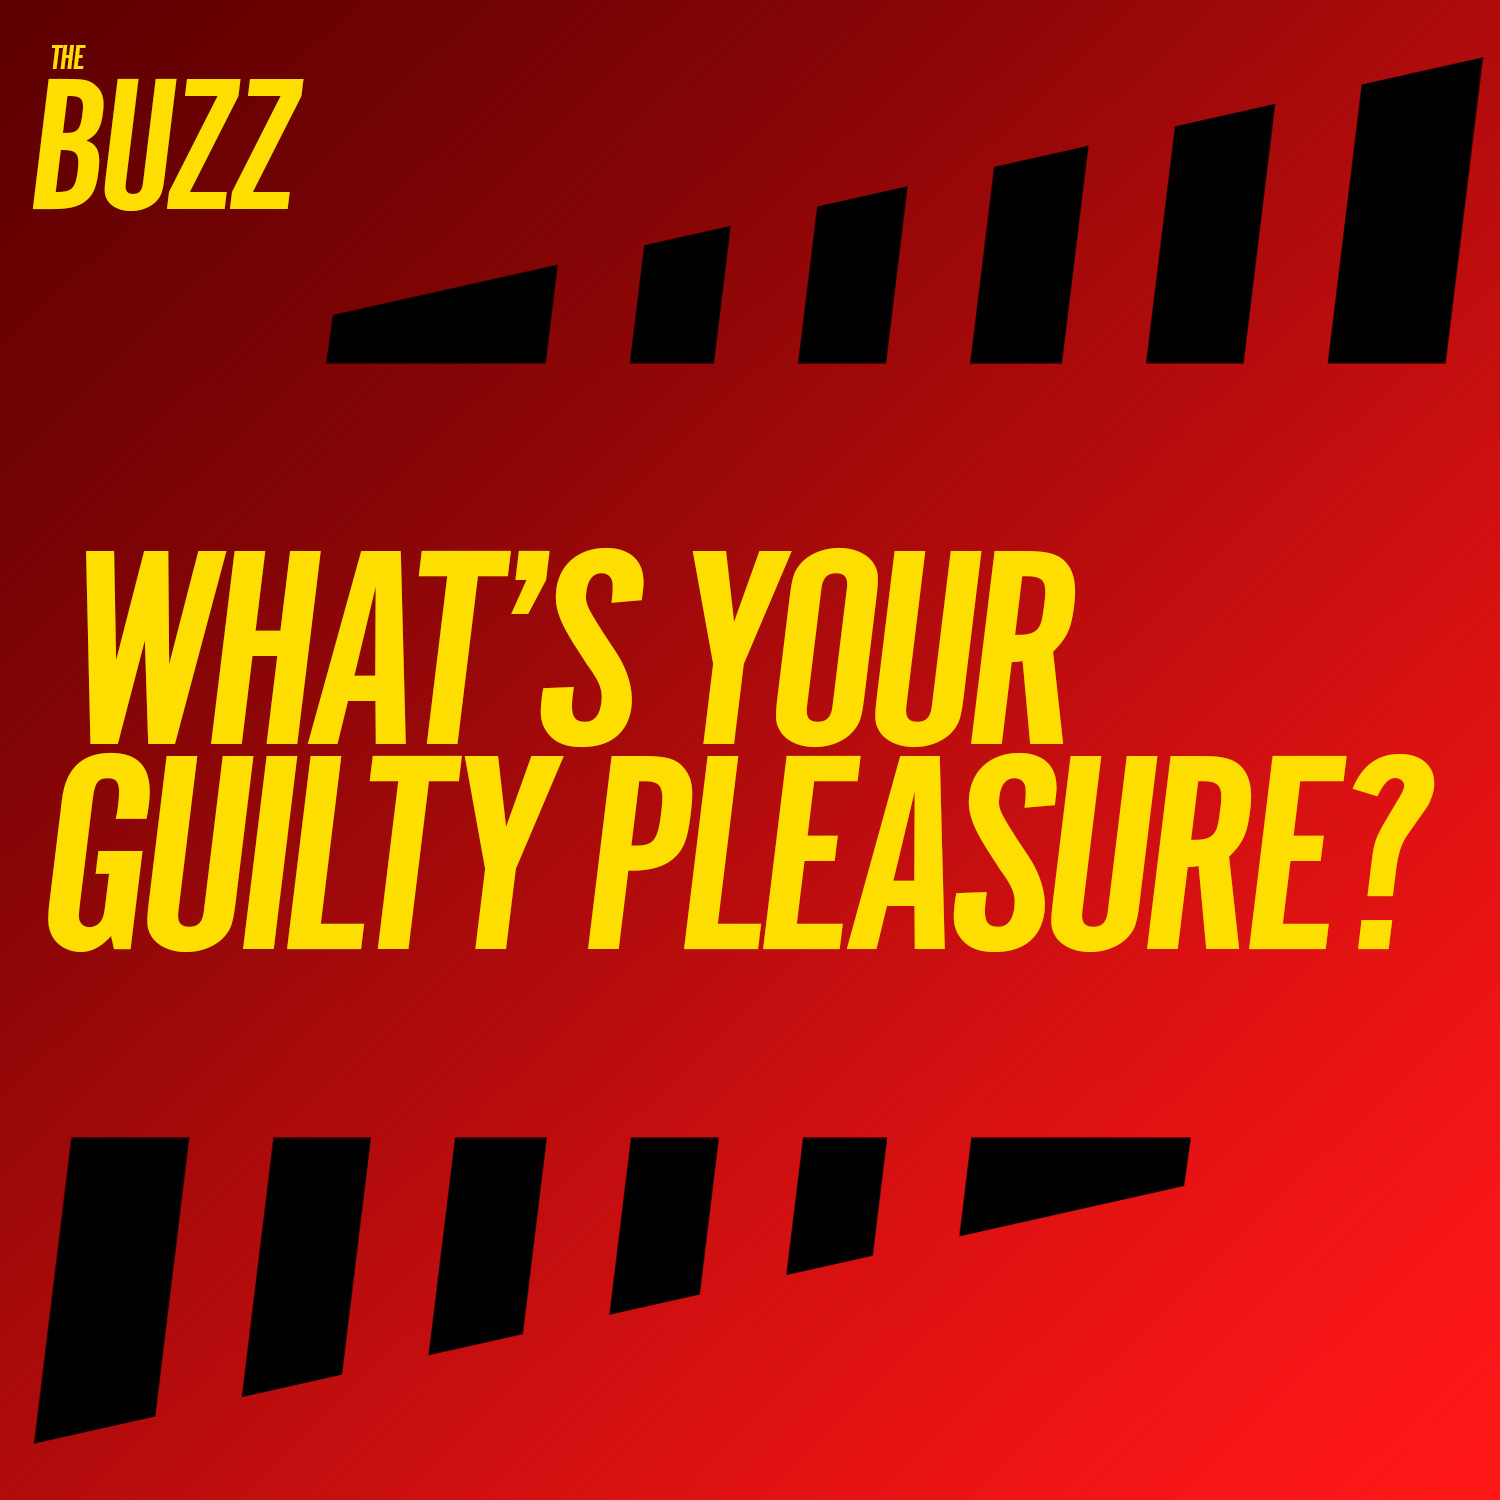 Buzz: Guilty Pleasure